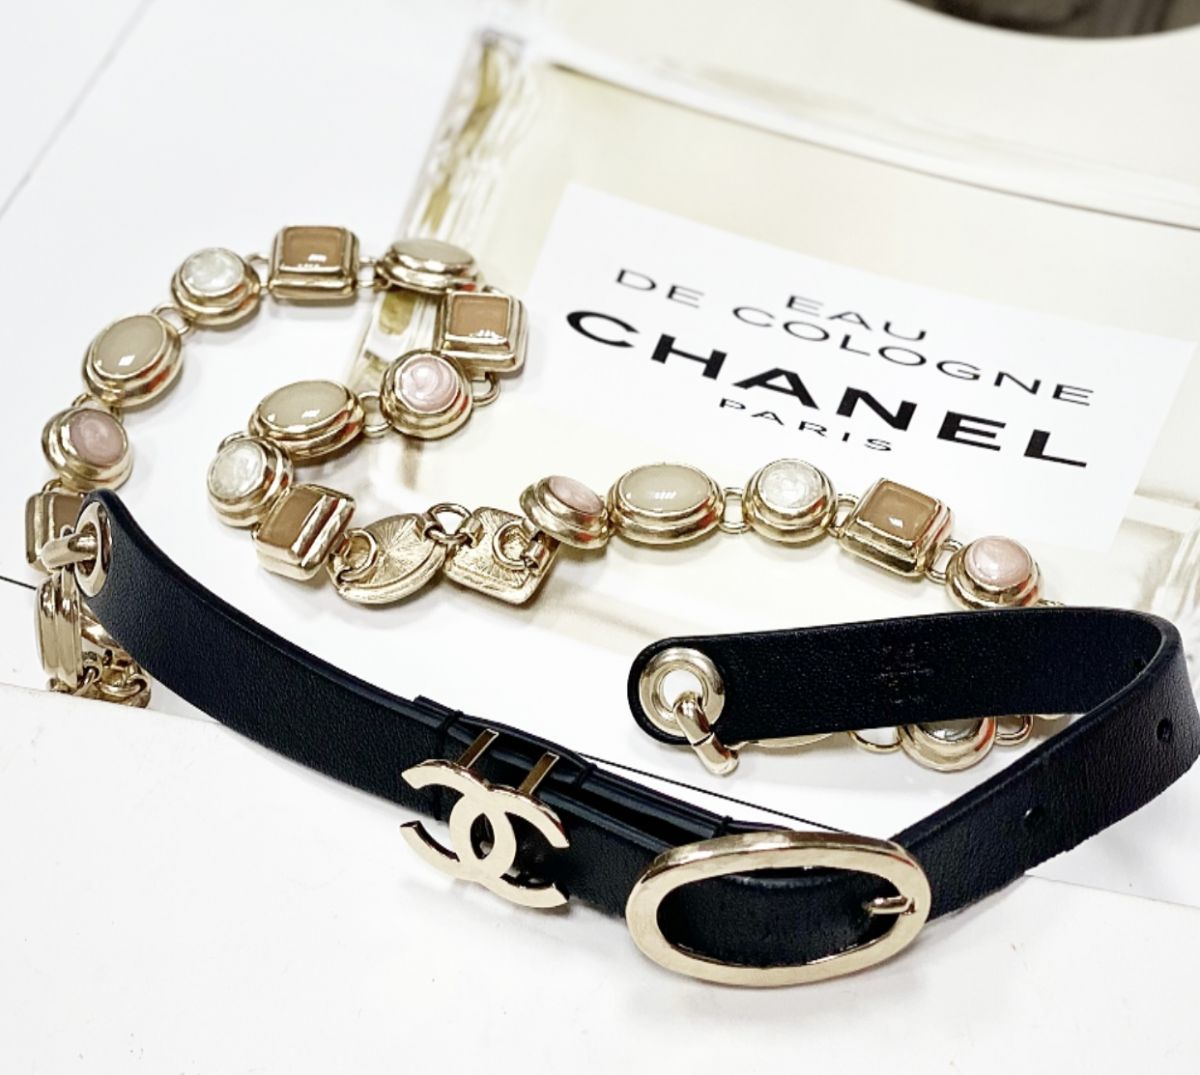 Пояс / камни / Chanel размер 75/30 цена 61 540 руб 